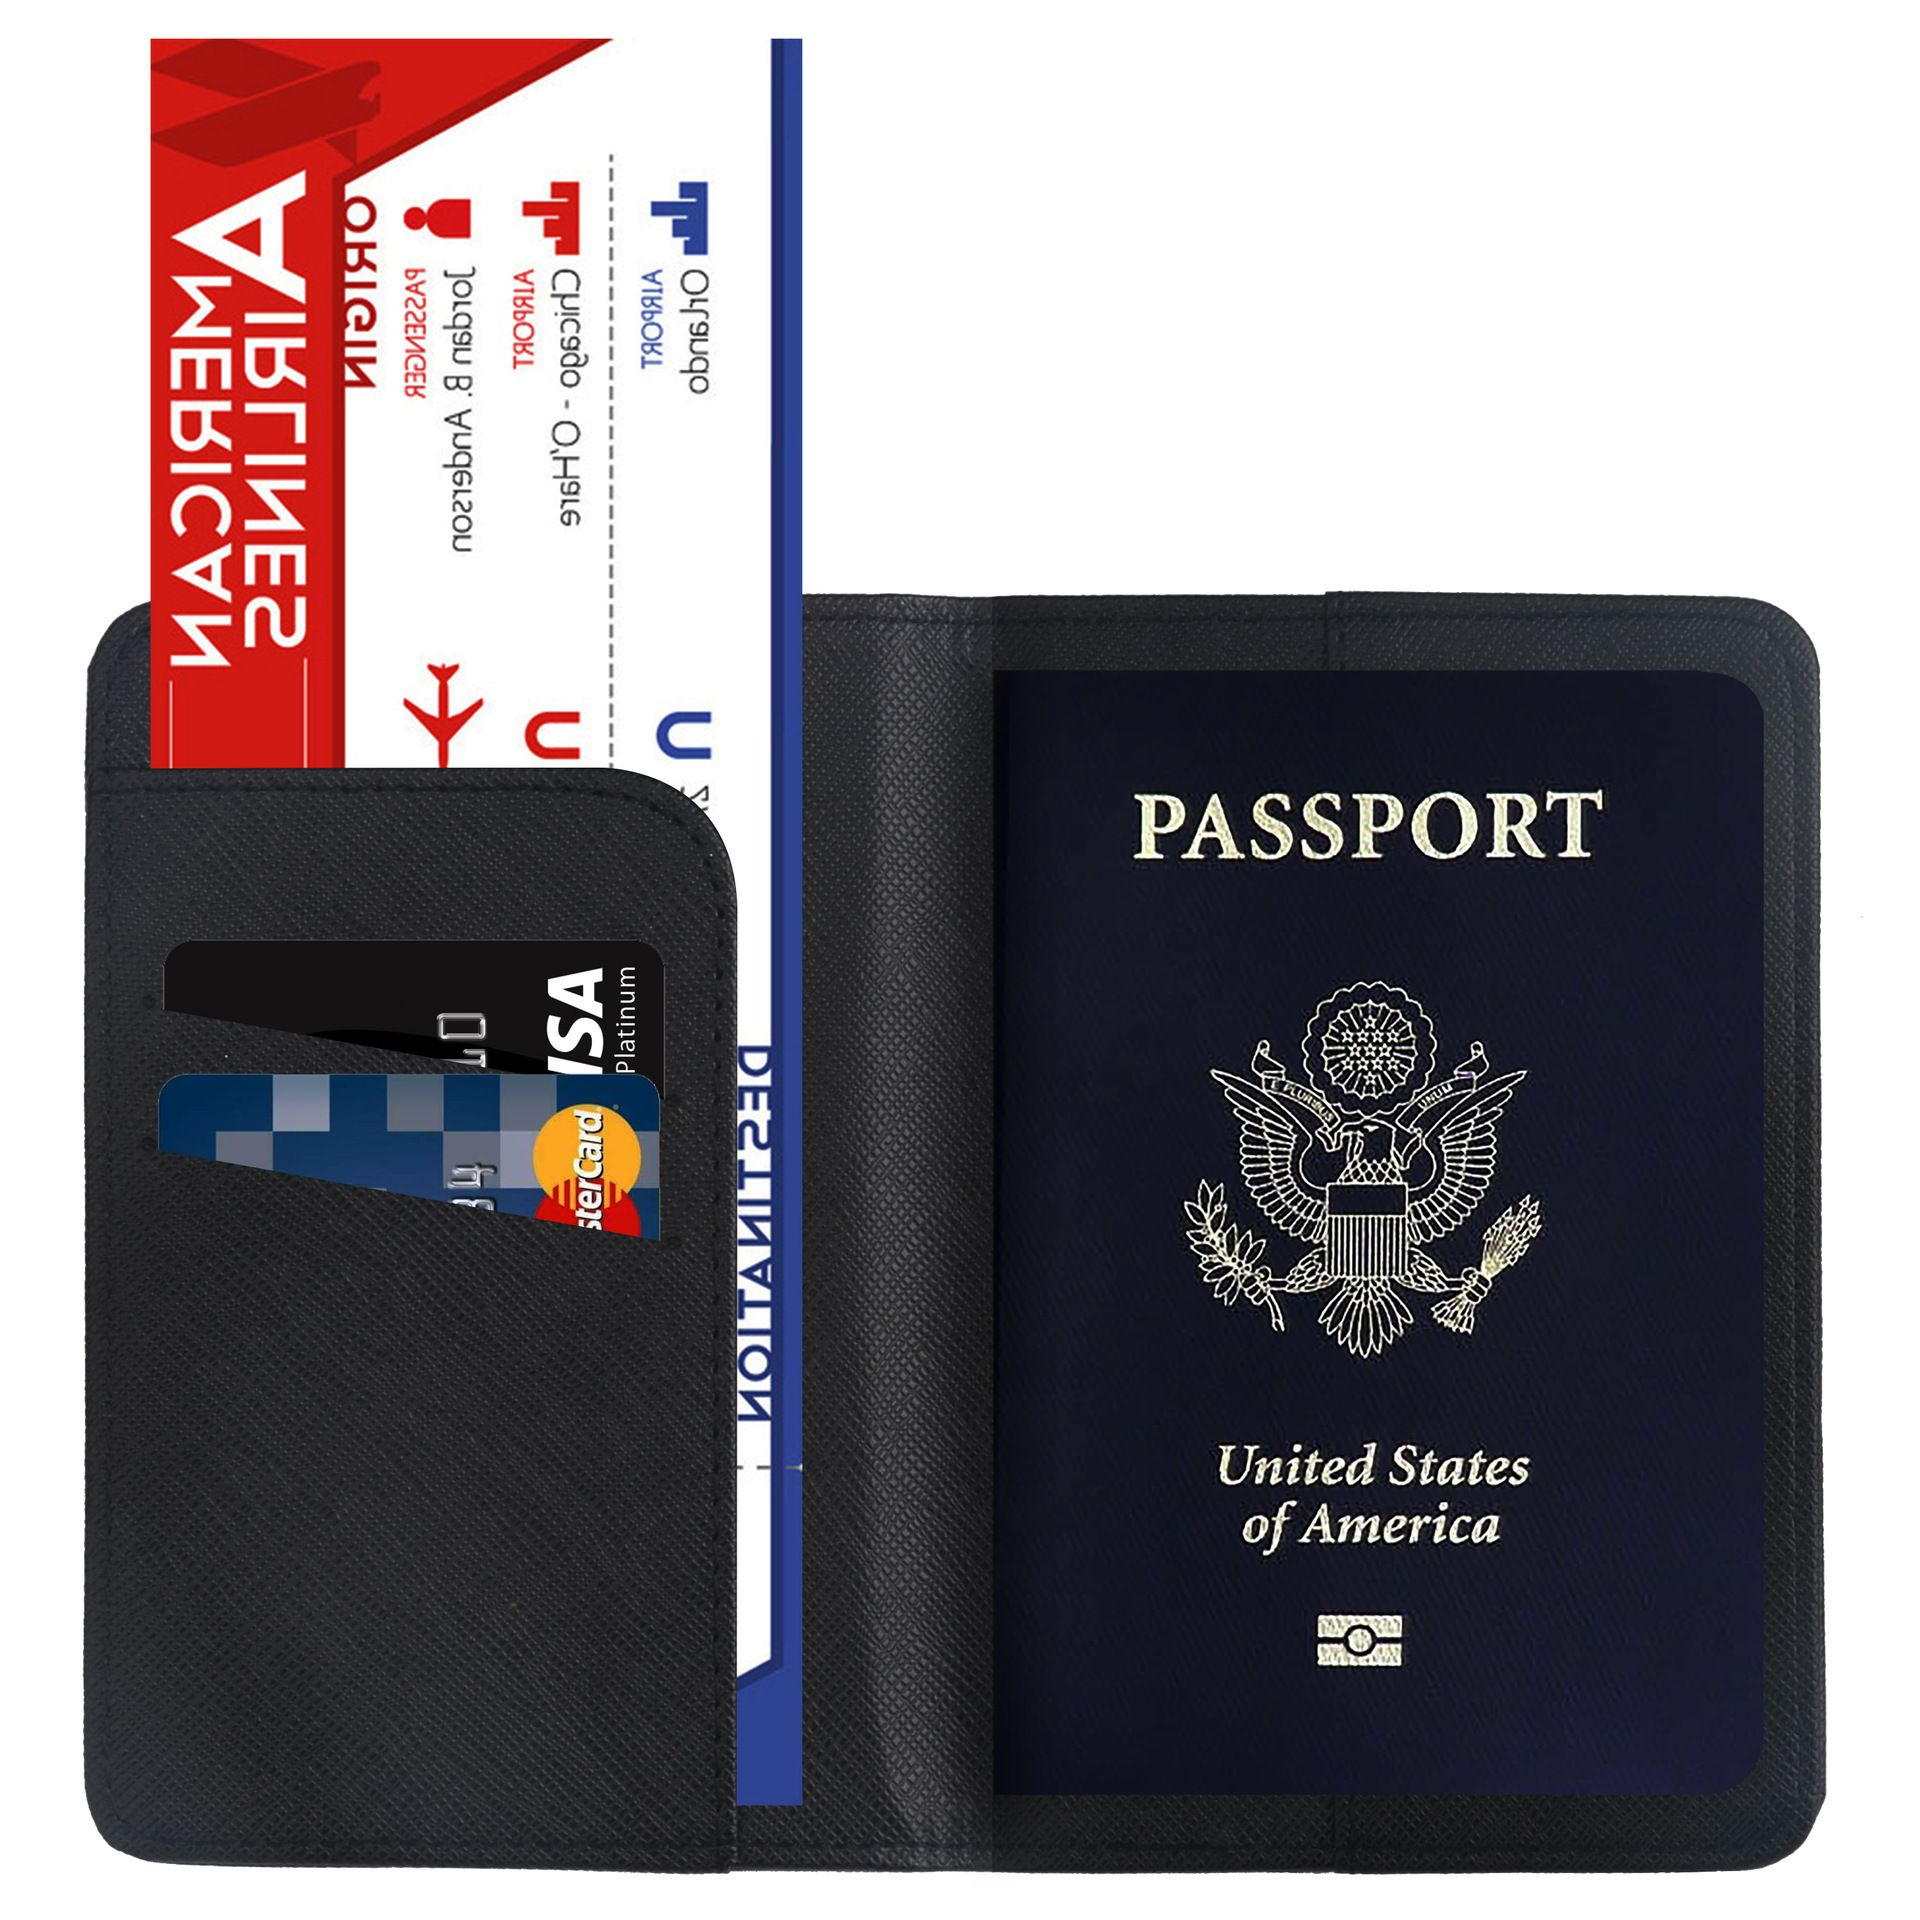 Slytherin Harry Potter Wizard Hogwarts Passport Wallet Card Holder Boarding Pass Travel Protection Flip Cover Case 